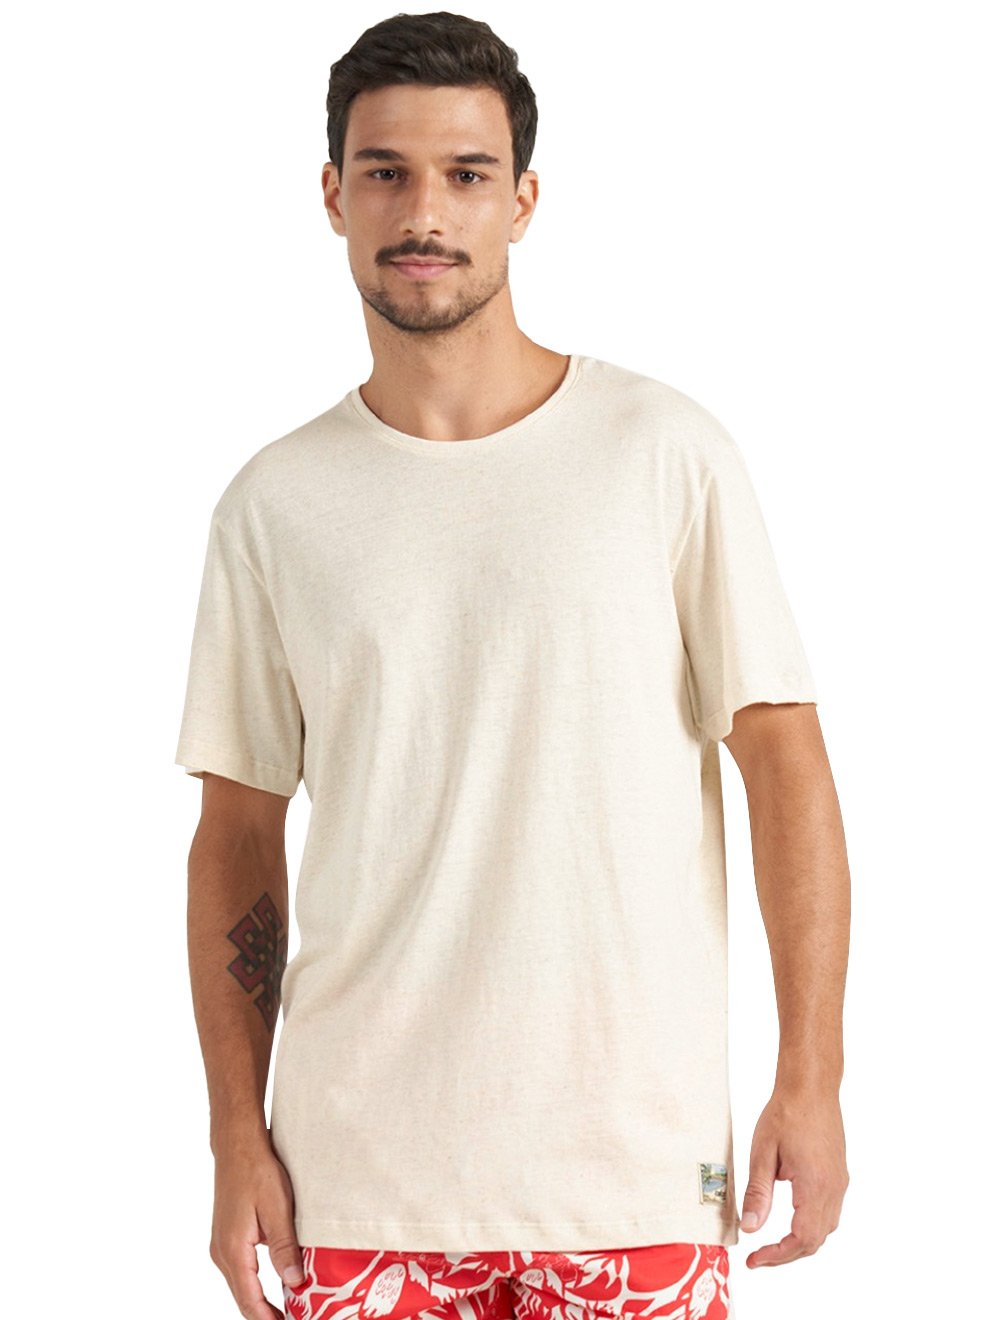 Camiseta Colcci Masculina Regular Linho Off-White Mescla